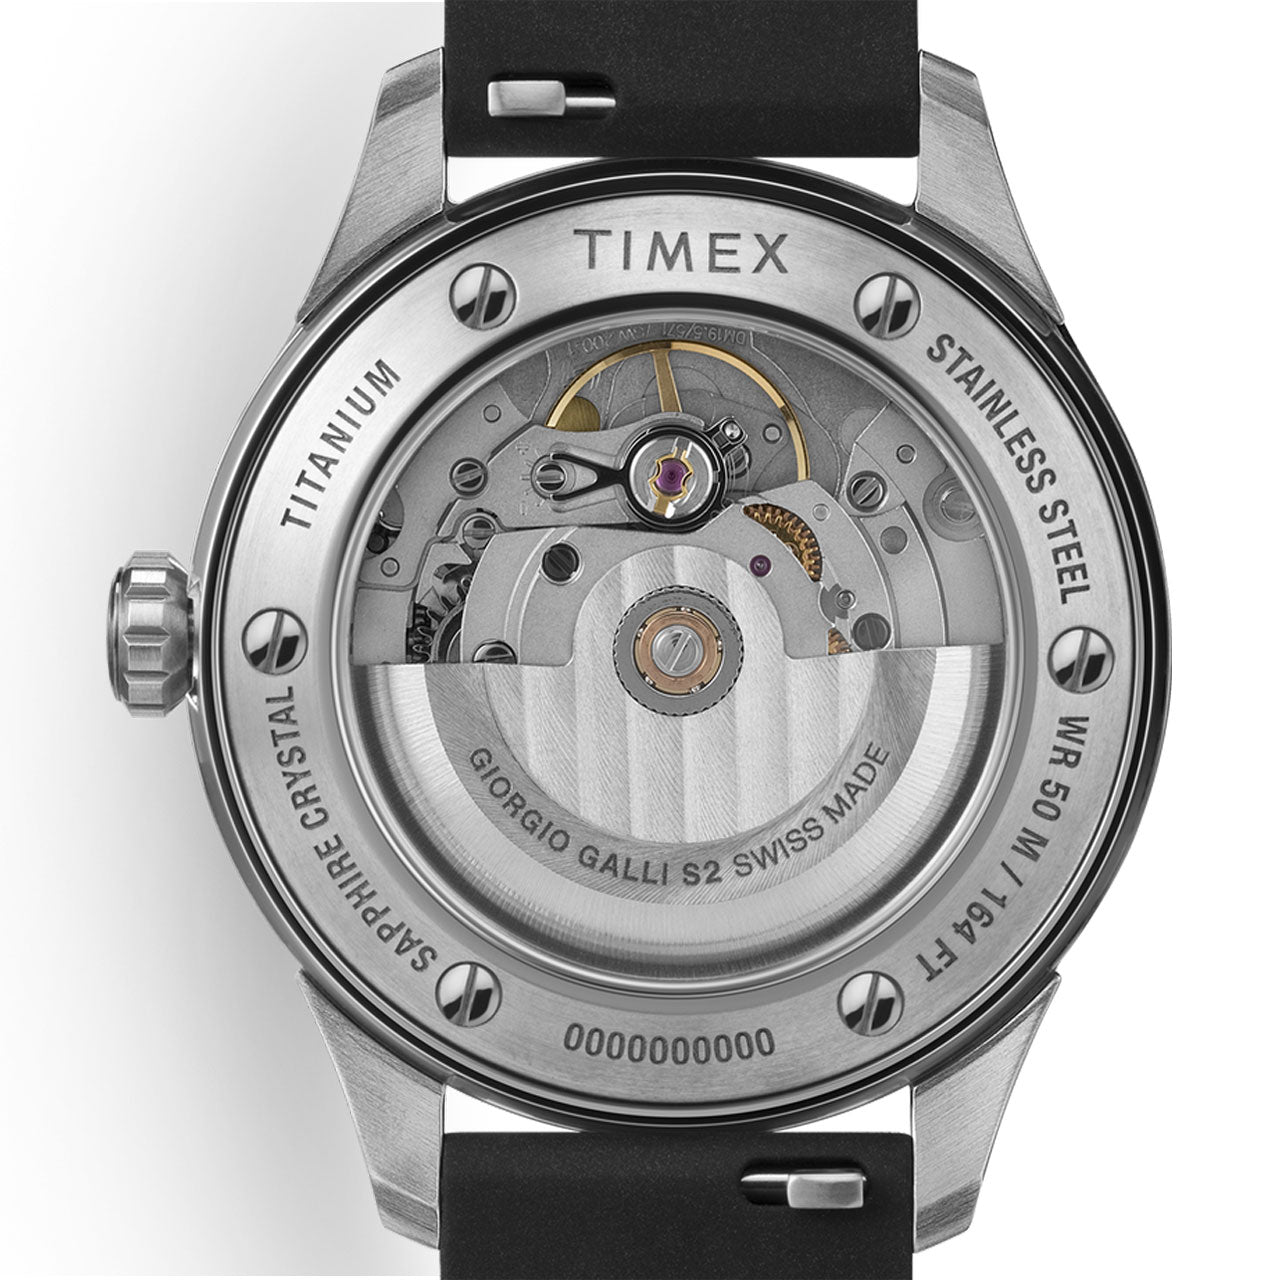 Timex Giorgio Galli S2 Uhr